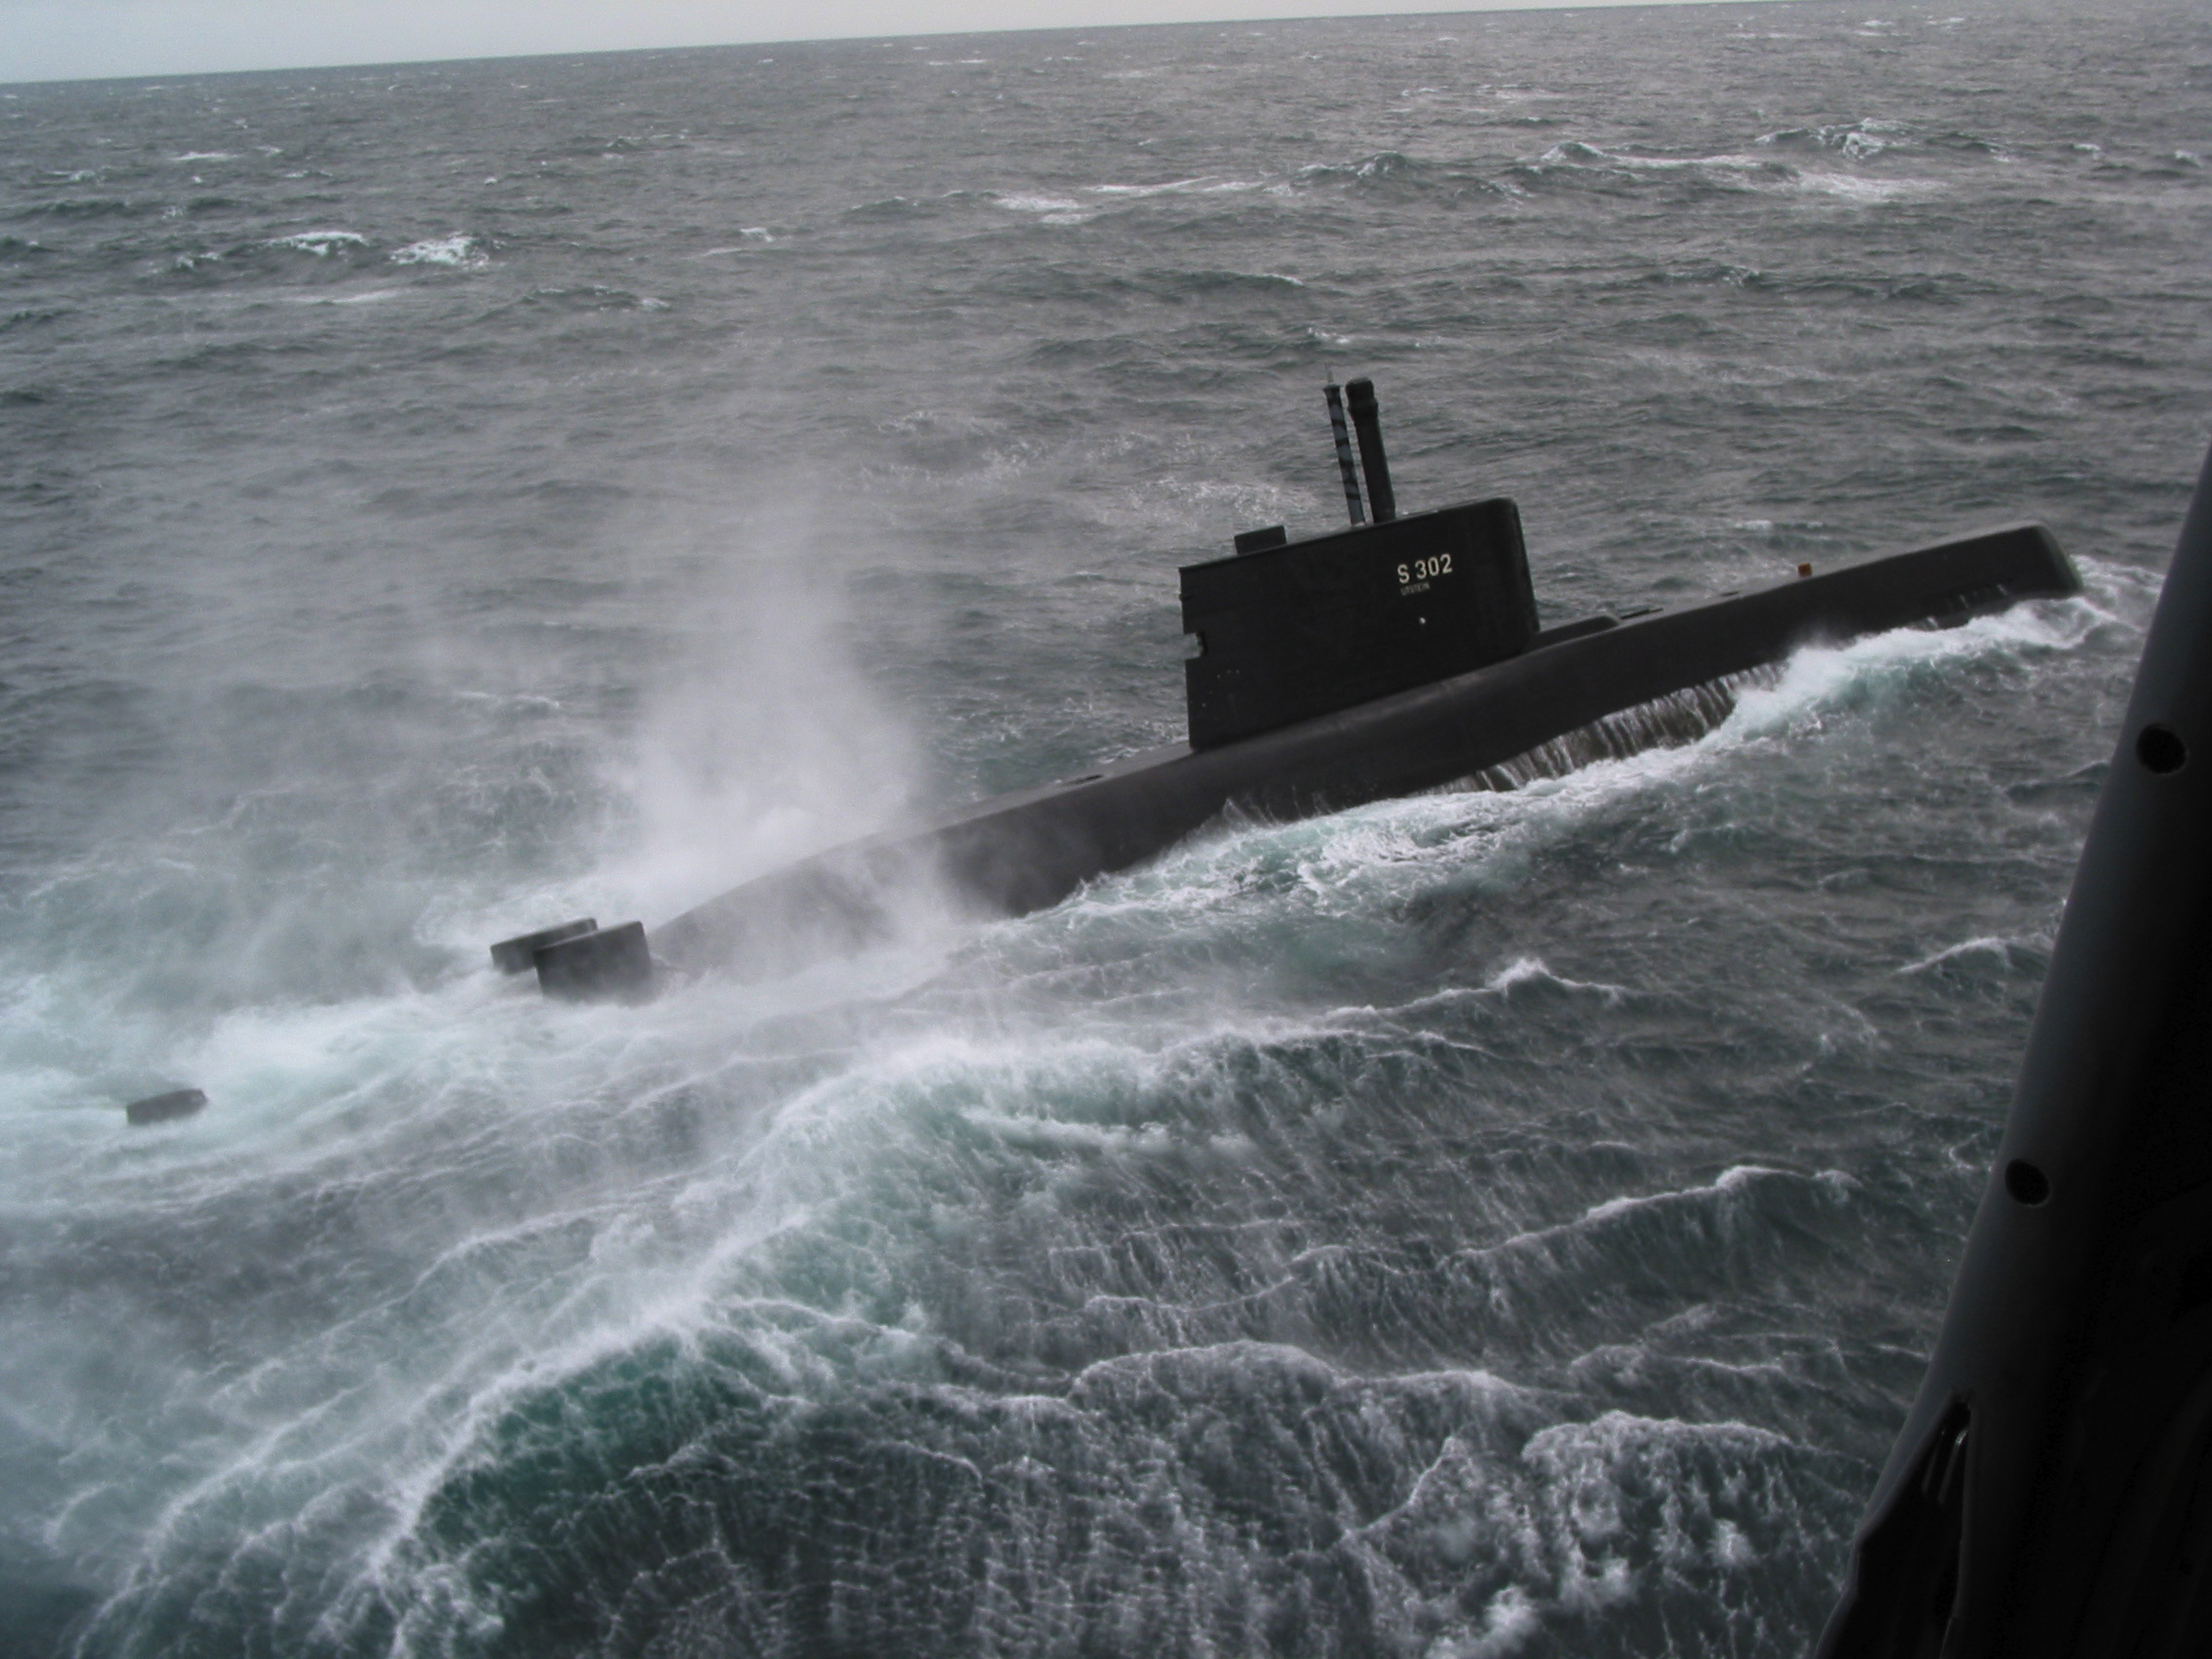 The_Norwegian_ULA_class_submarine_Utstein_(KNM_302)_participates_in_NATO_exercise_Odin-One.jpg